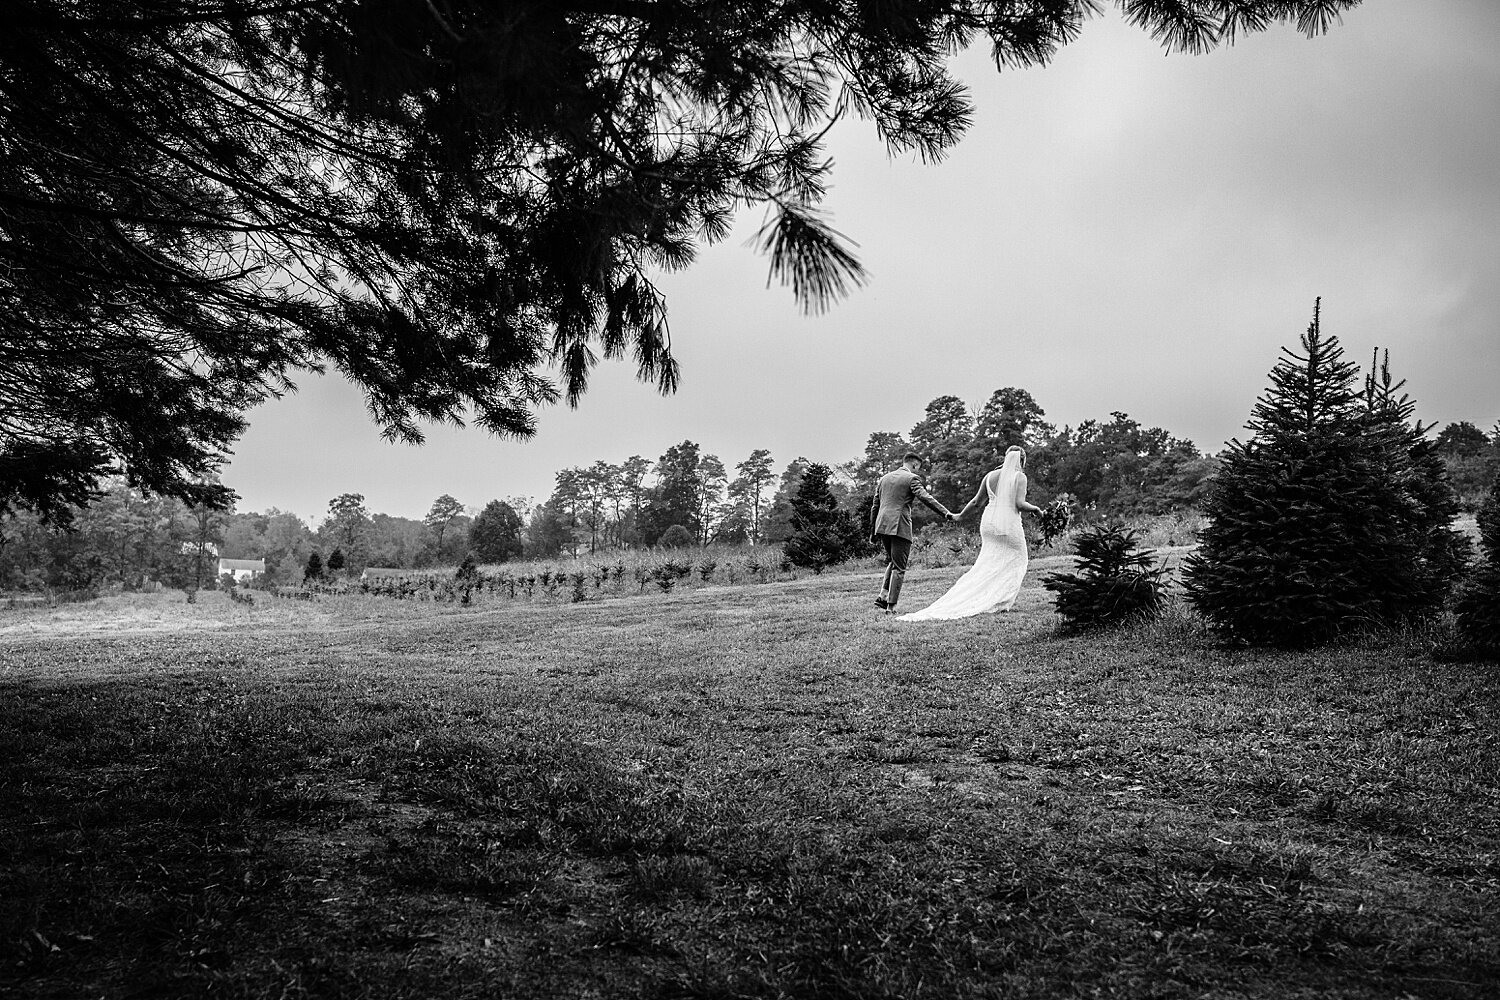 Reinhart's Christmas Tree Farm Barn Wedding Fall Berks County Pennsylvania Wedding Photographer